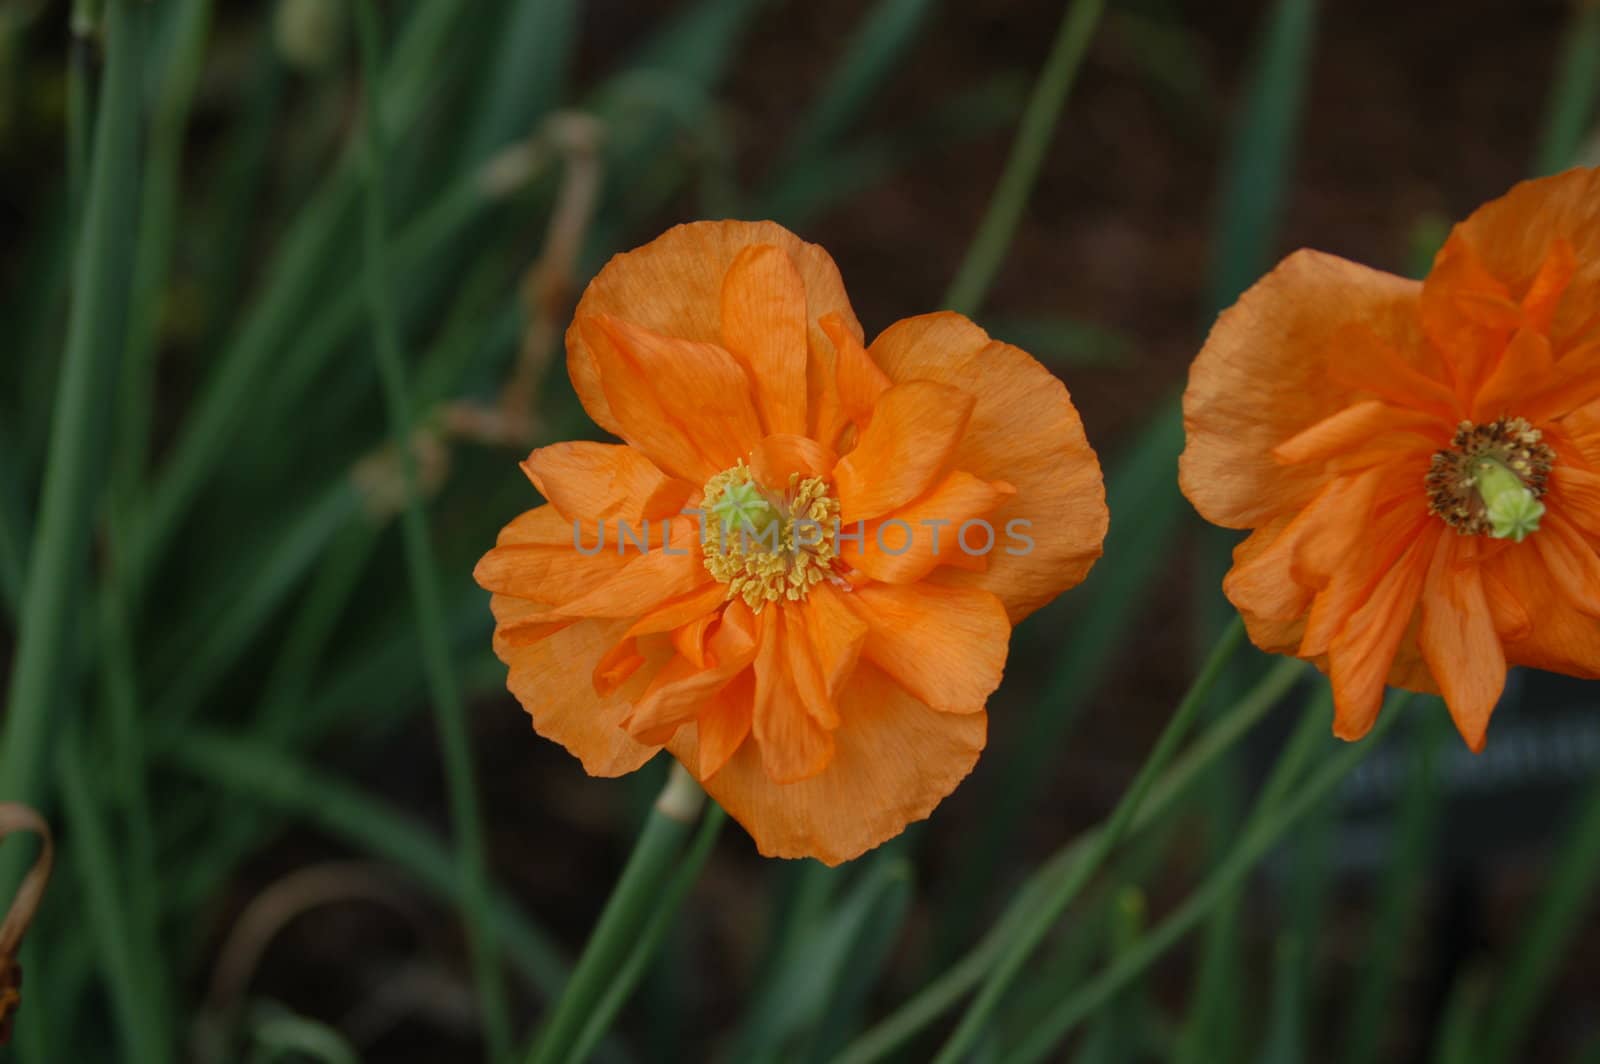 Orange flower by northwoodsphoto